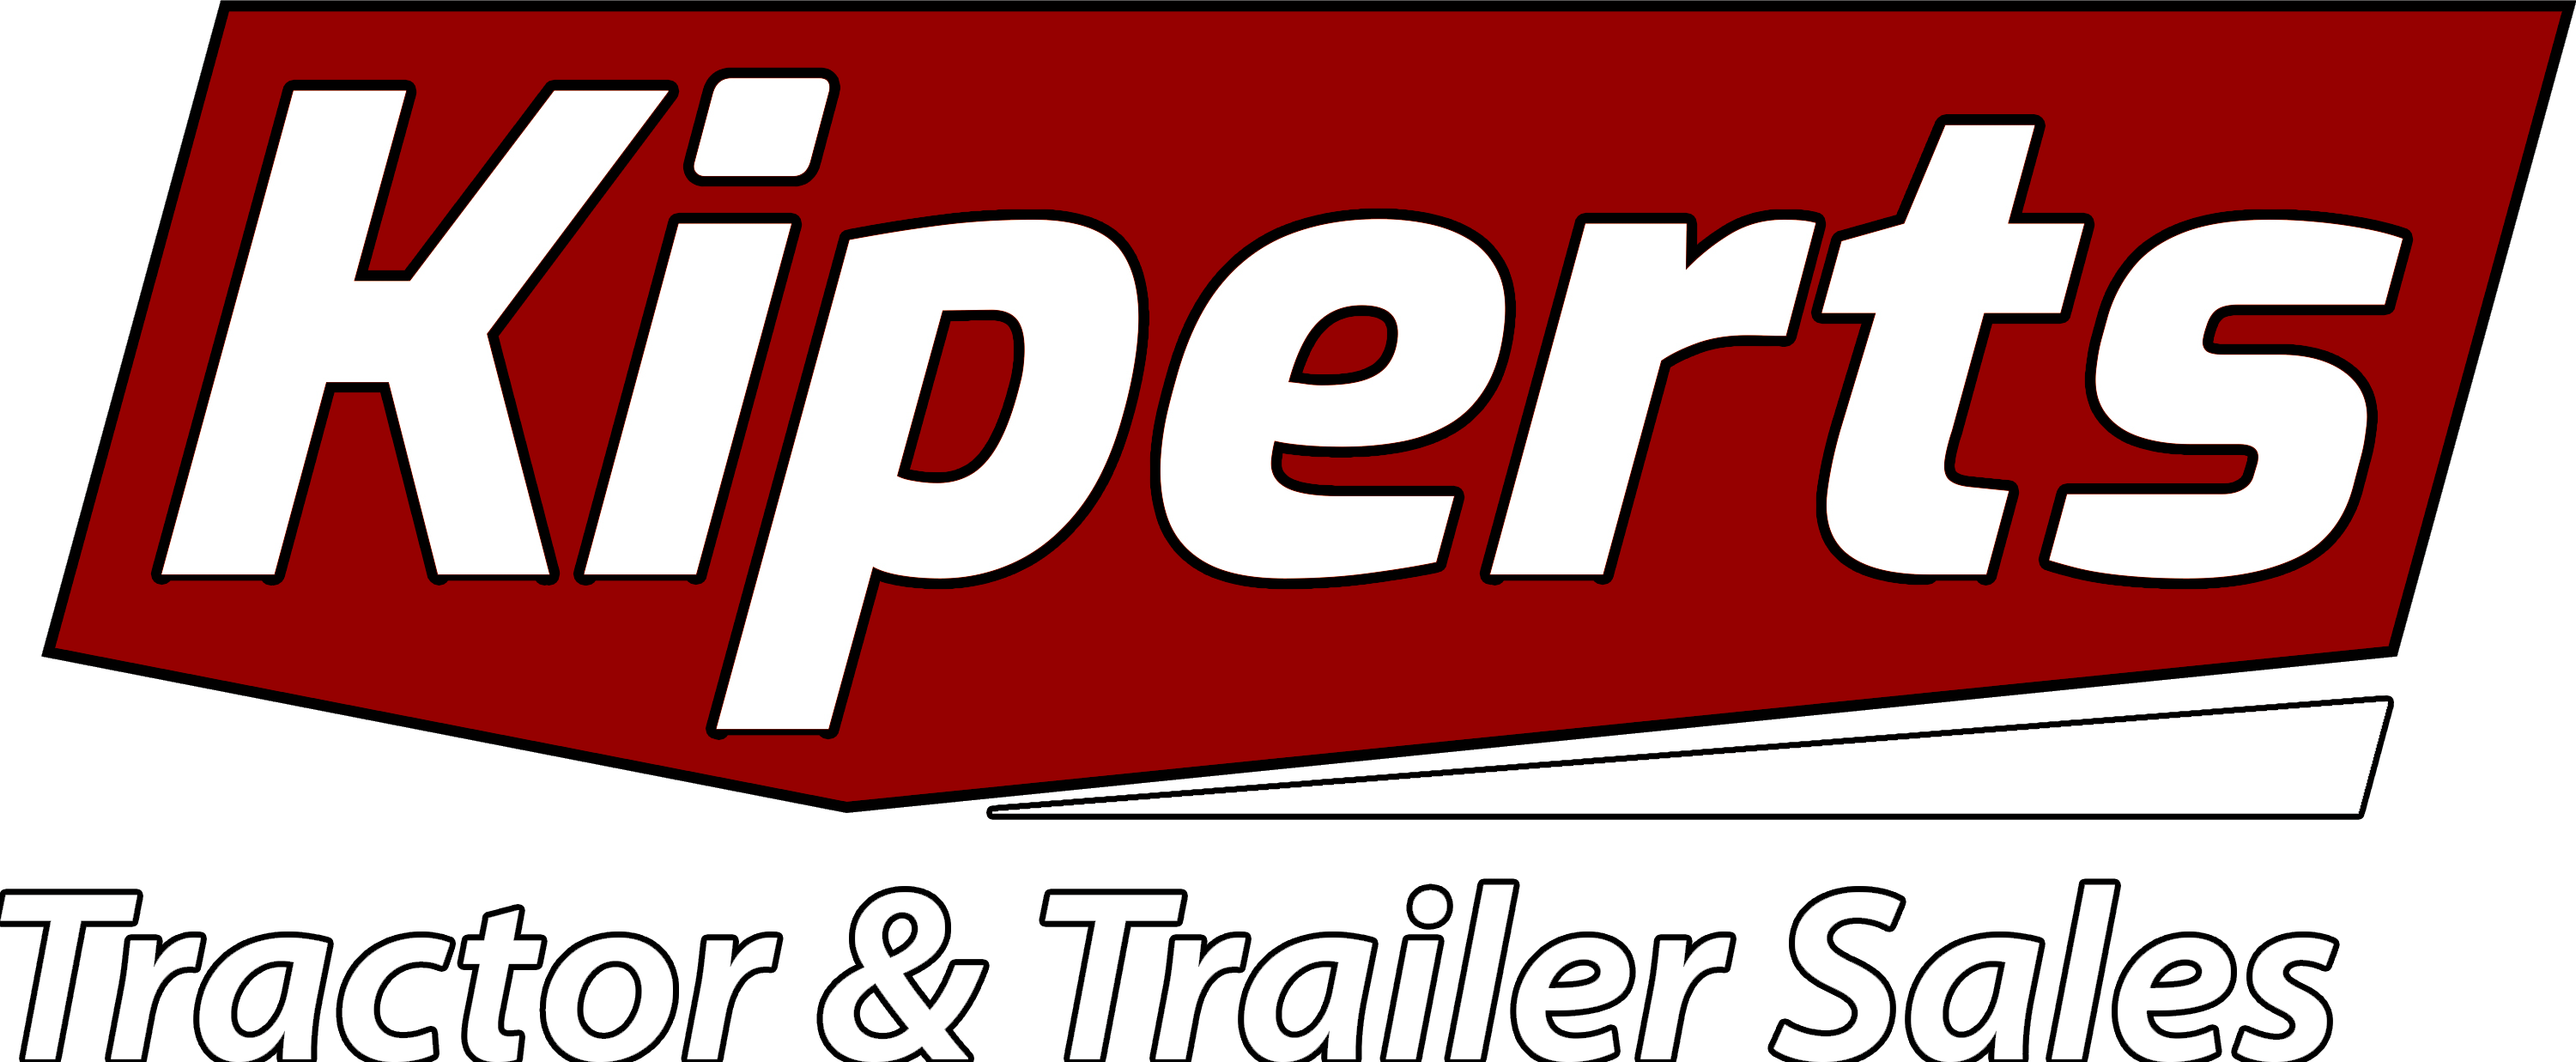 Kiperts Trailer Sales